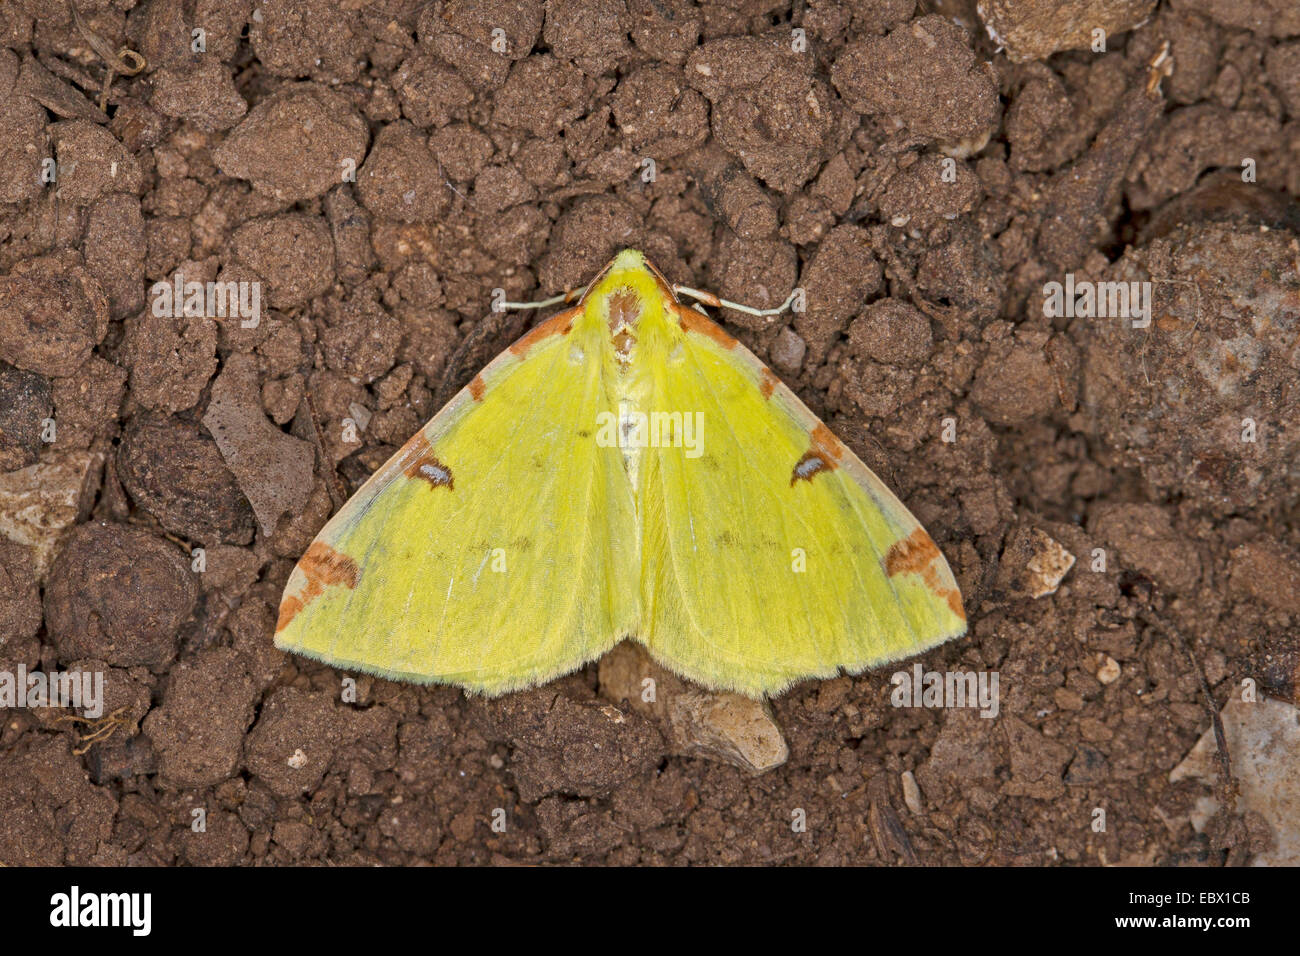 brimstone moth (Opisthograptis luteolata), on the ground, Germany Stock Photo